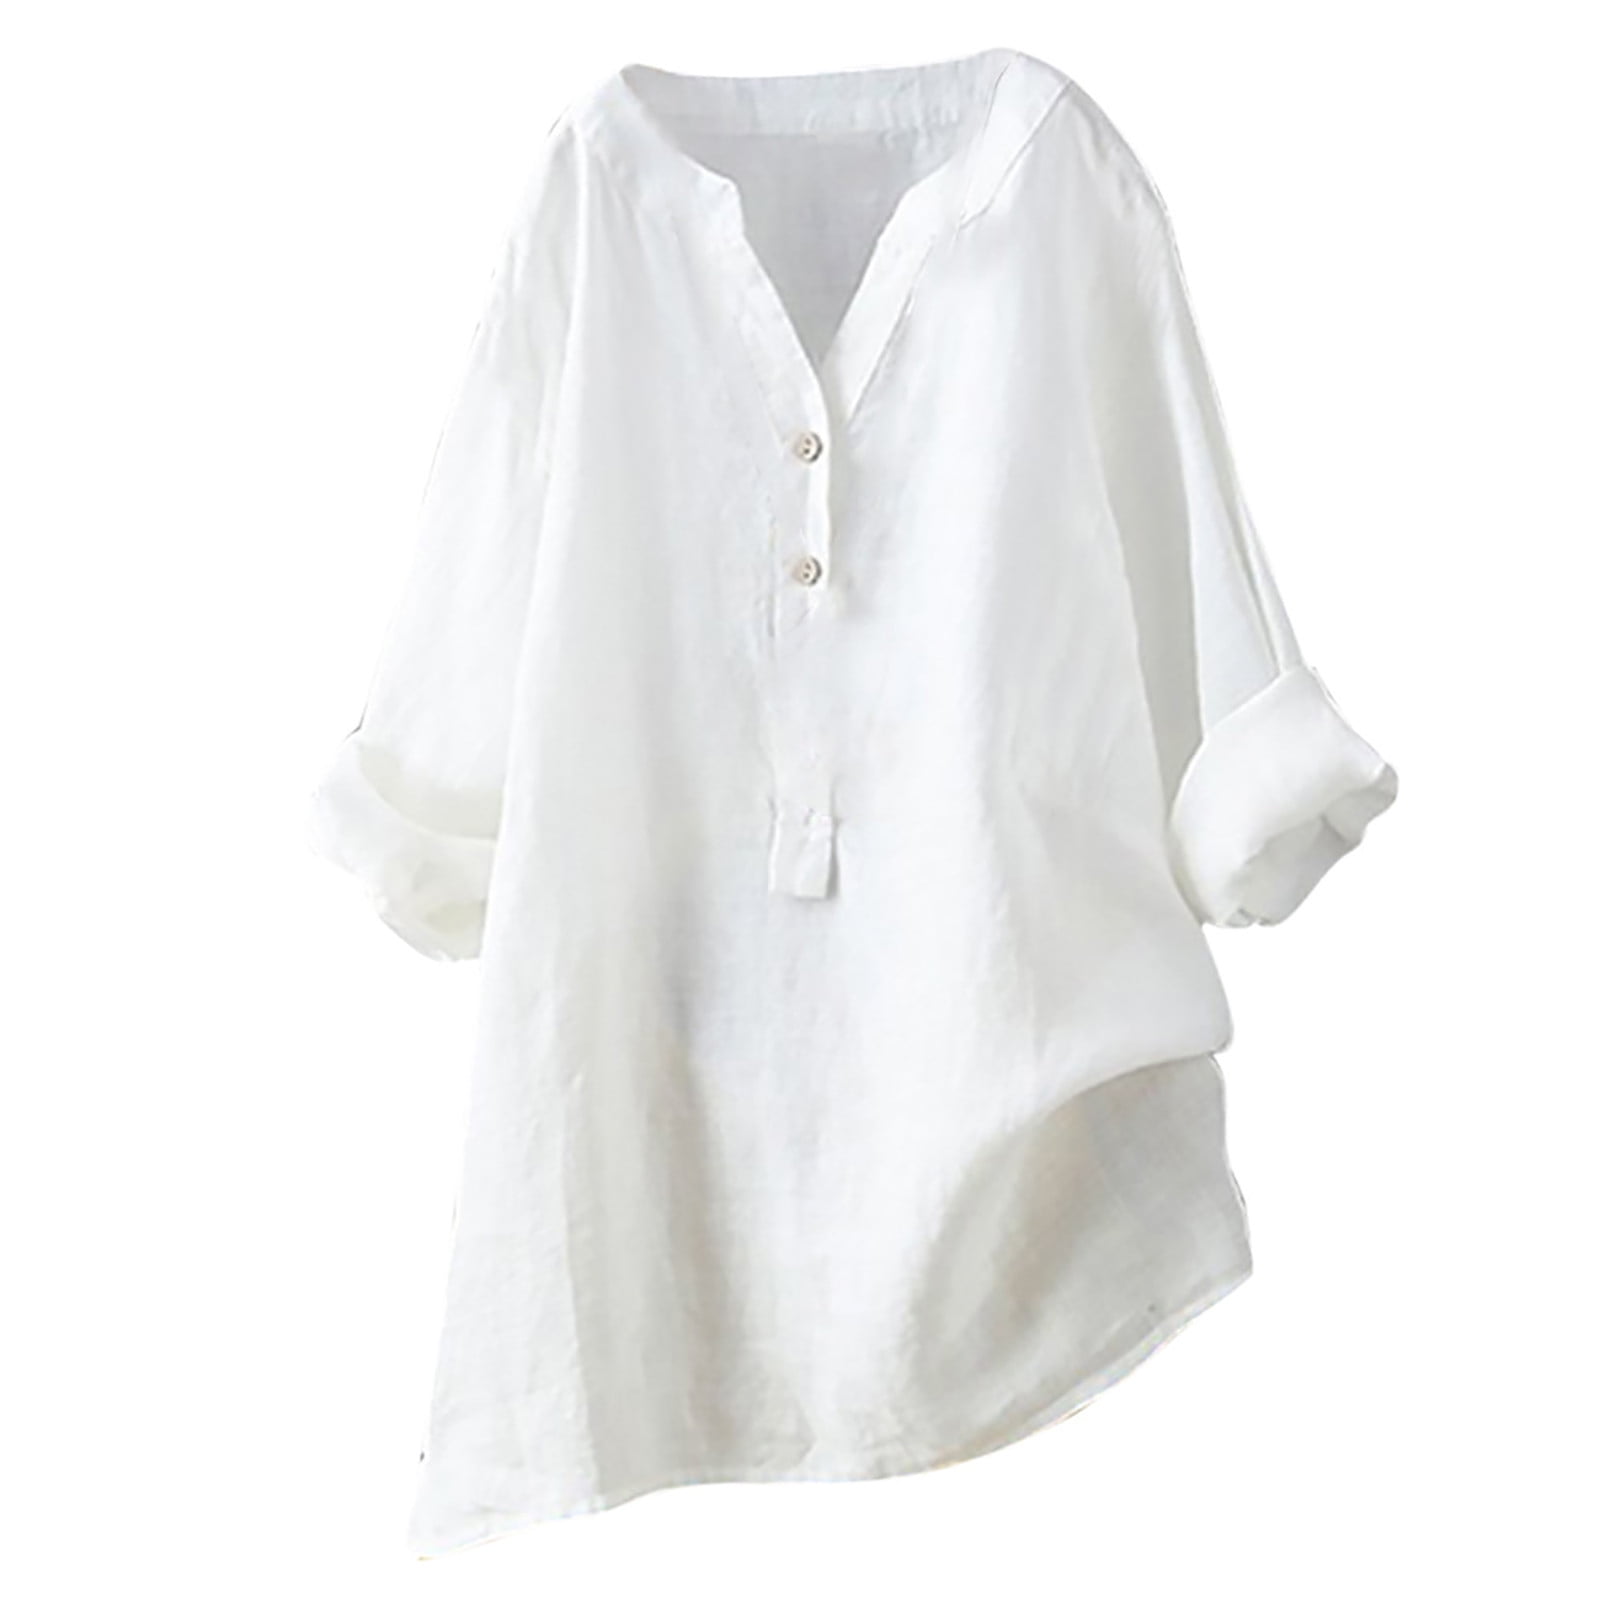 UPPADA Tops for Women Summer Cotton Linen Shirts Solid Color Shirt 3/4 ...